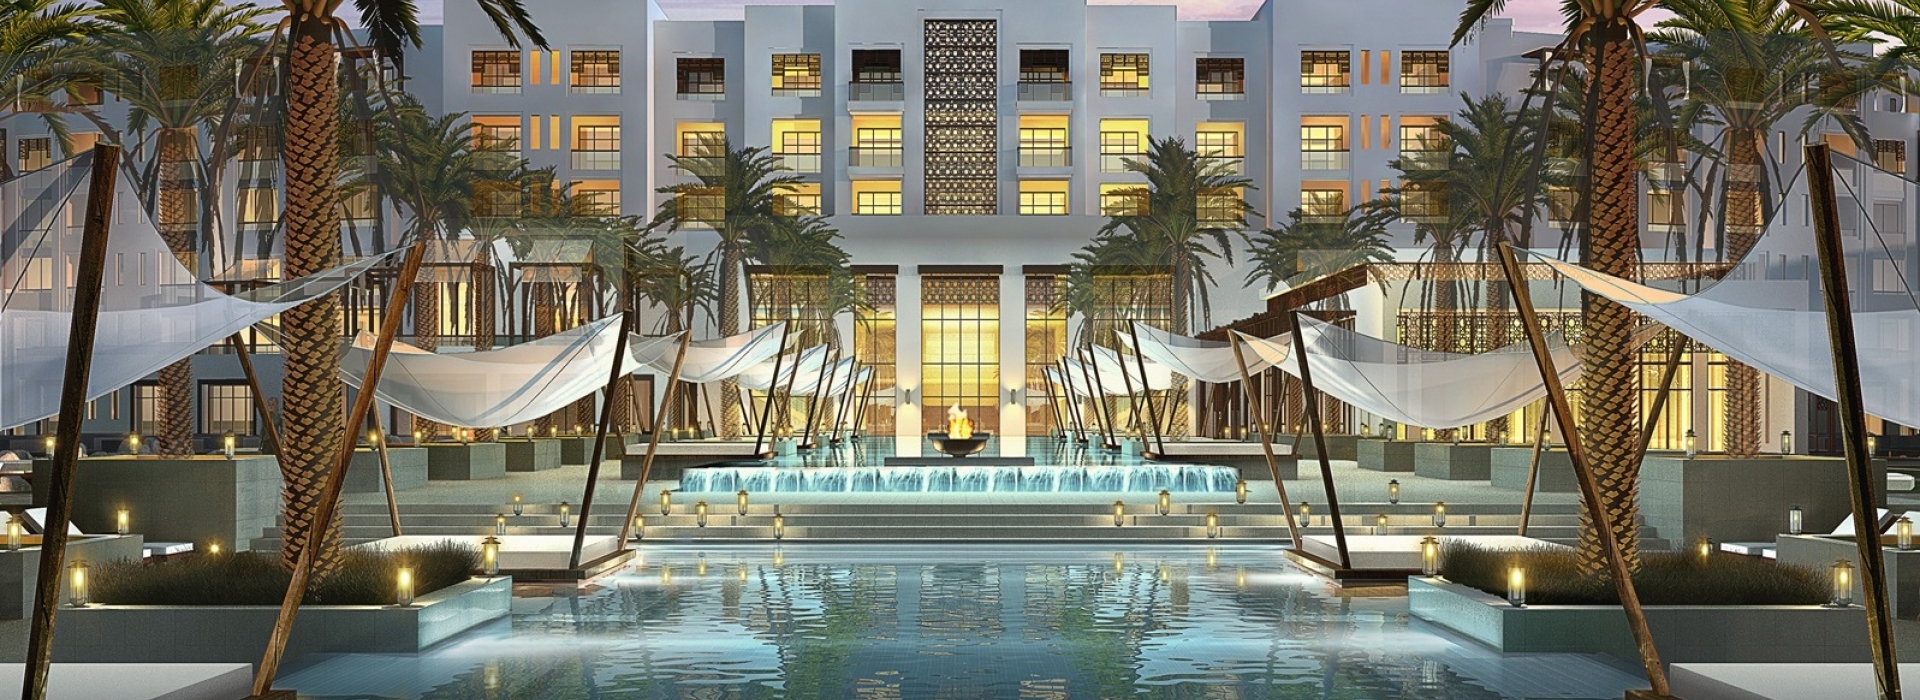 Park Hyatt Abu Dhabi Hotels and Villas 5* 